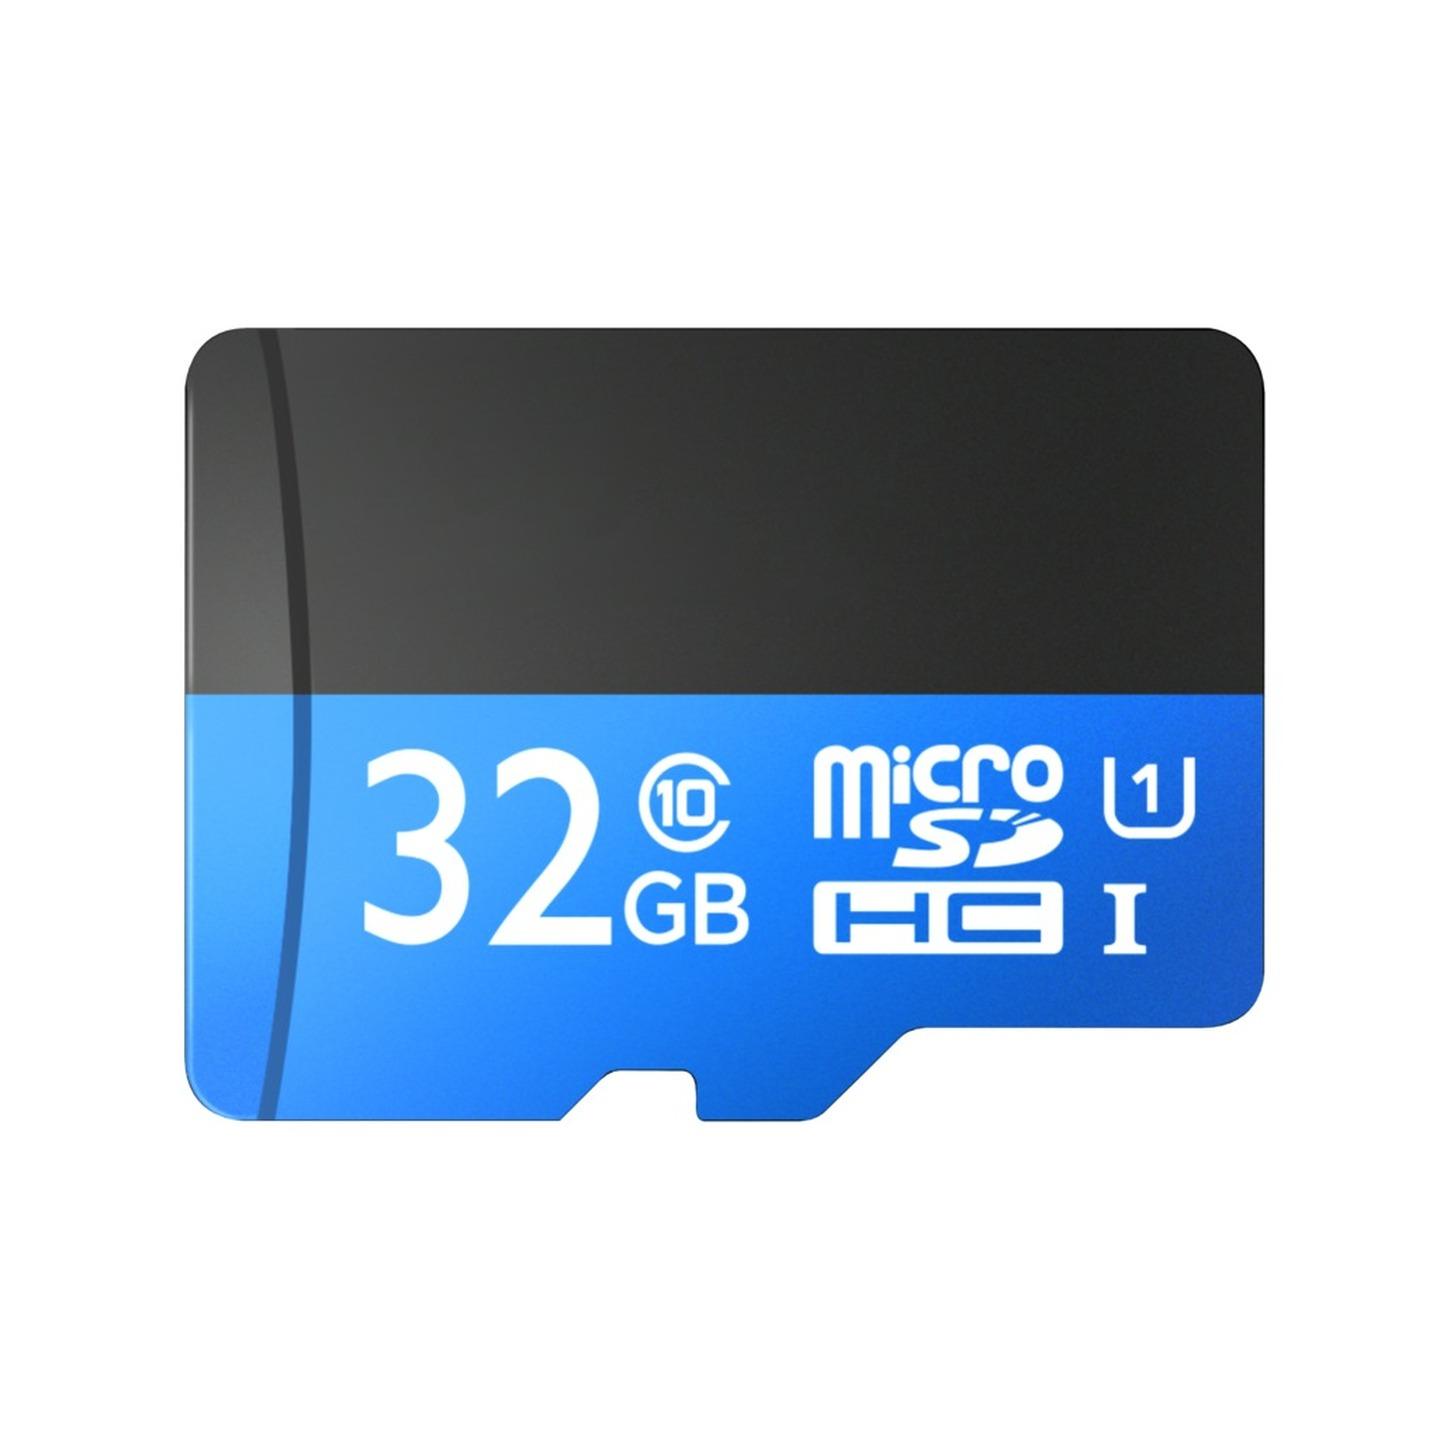 32GB Micro SDXC Class 10 Reads 90MB/s Writes 30MB/s